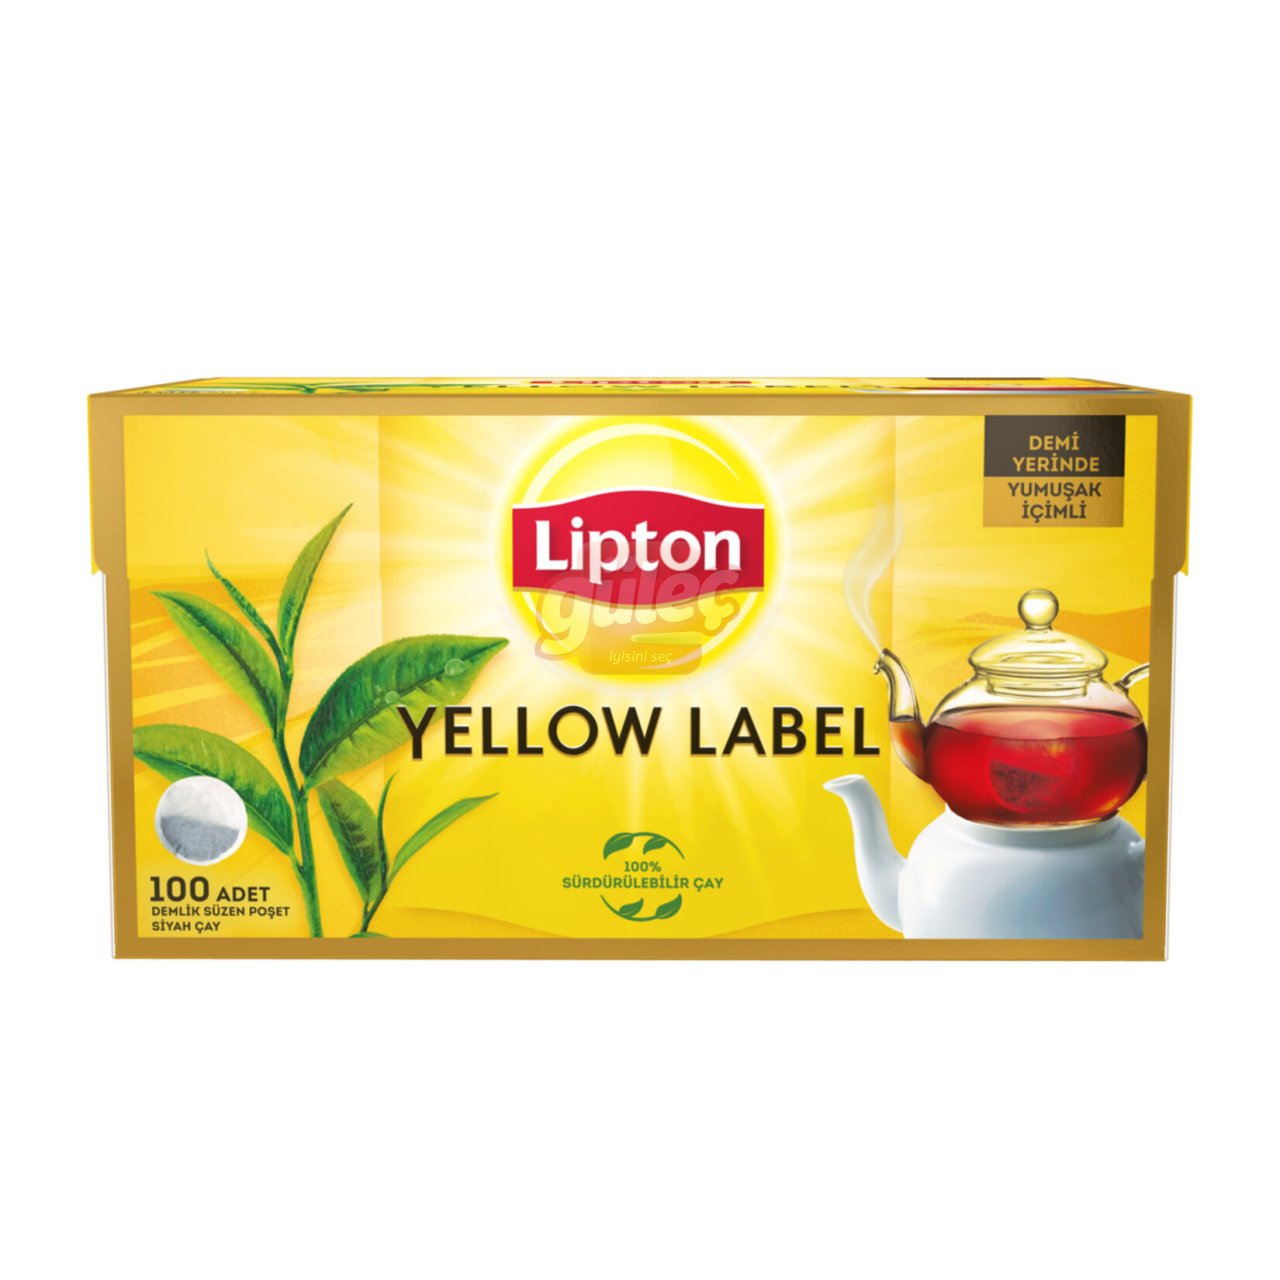 Lipton Yellow Label Demlik Poşet Çay 100'lü 320 G